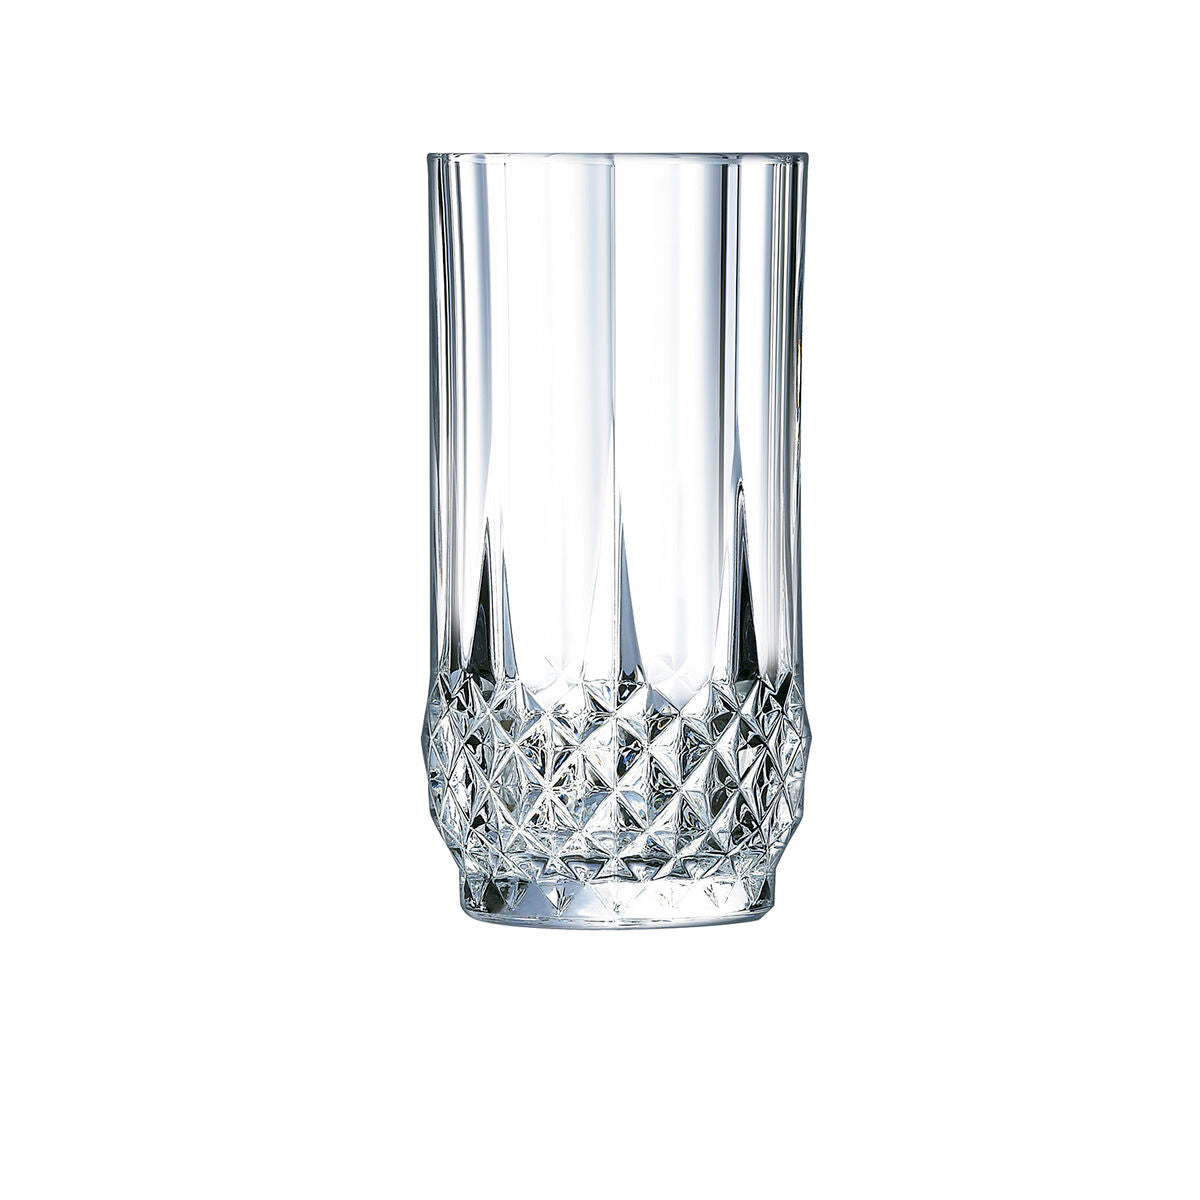 Trinkglas Cristal d’Arques Paris Longchamp Durchsichtig Glas 6 Stück 280 ml (Pack 6x)